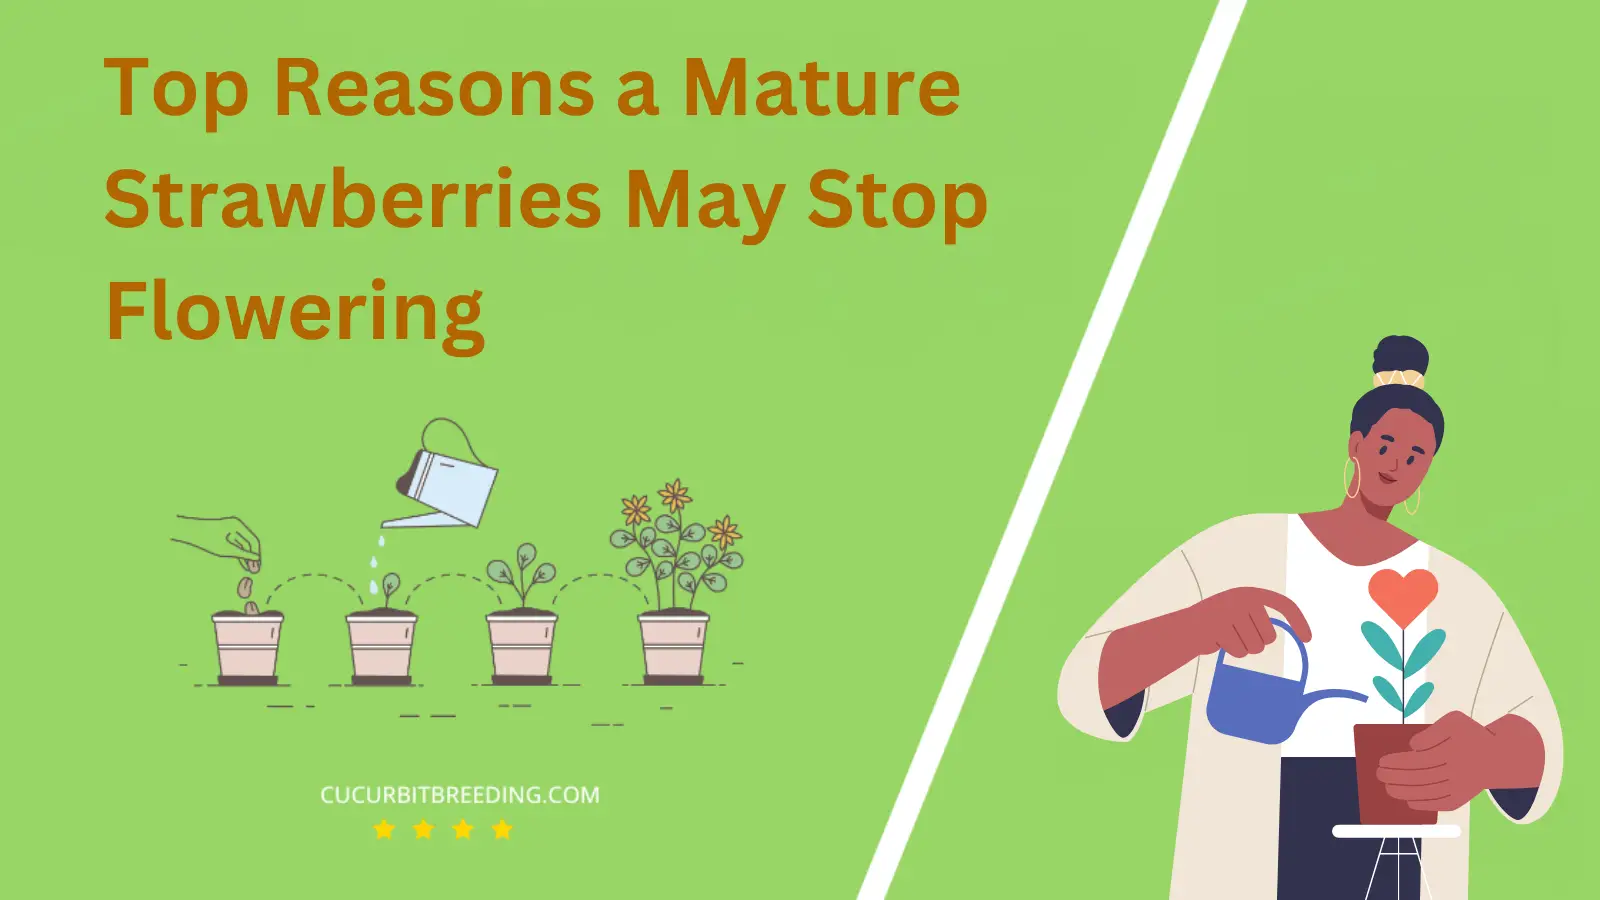 Top Reasons a Mature Strawberries May Stop Flowering